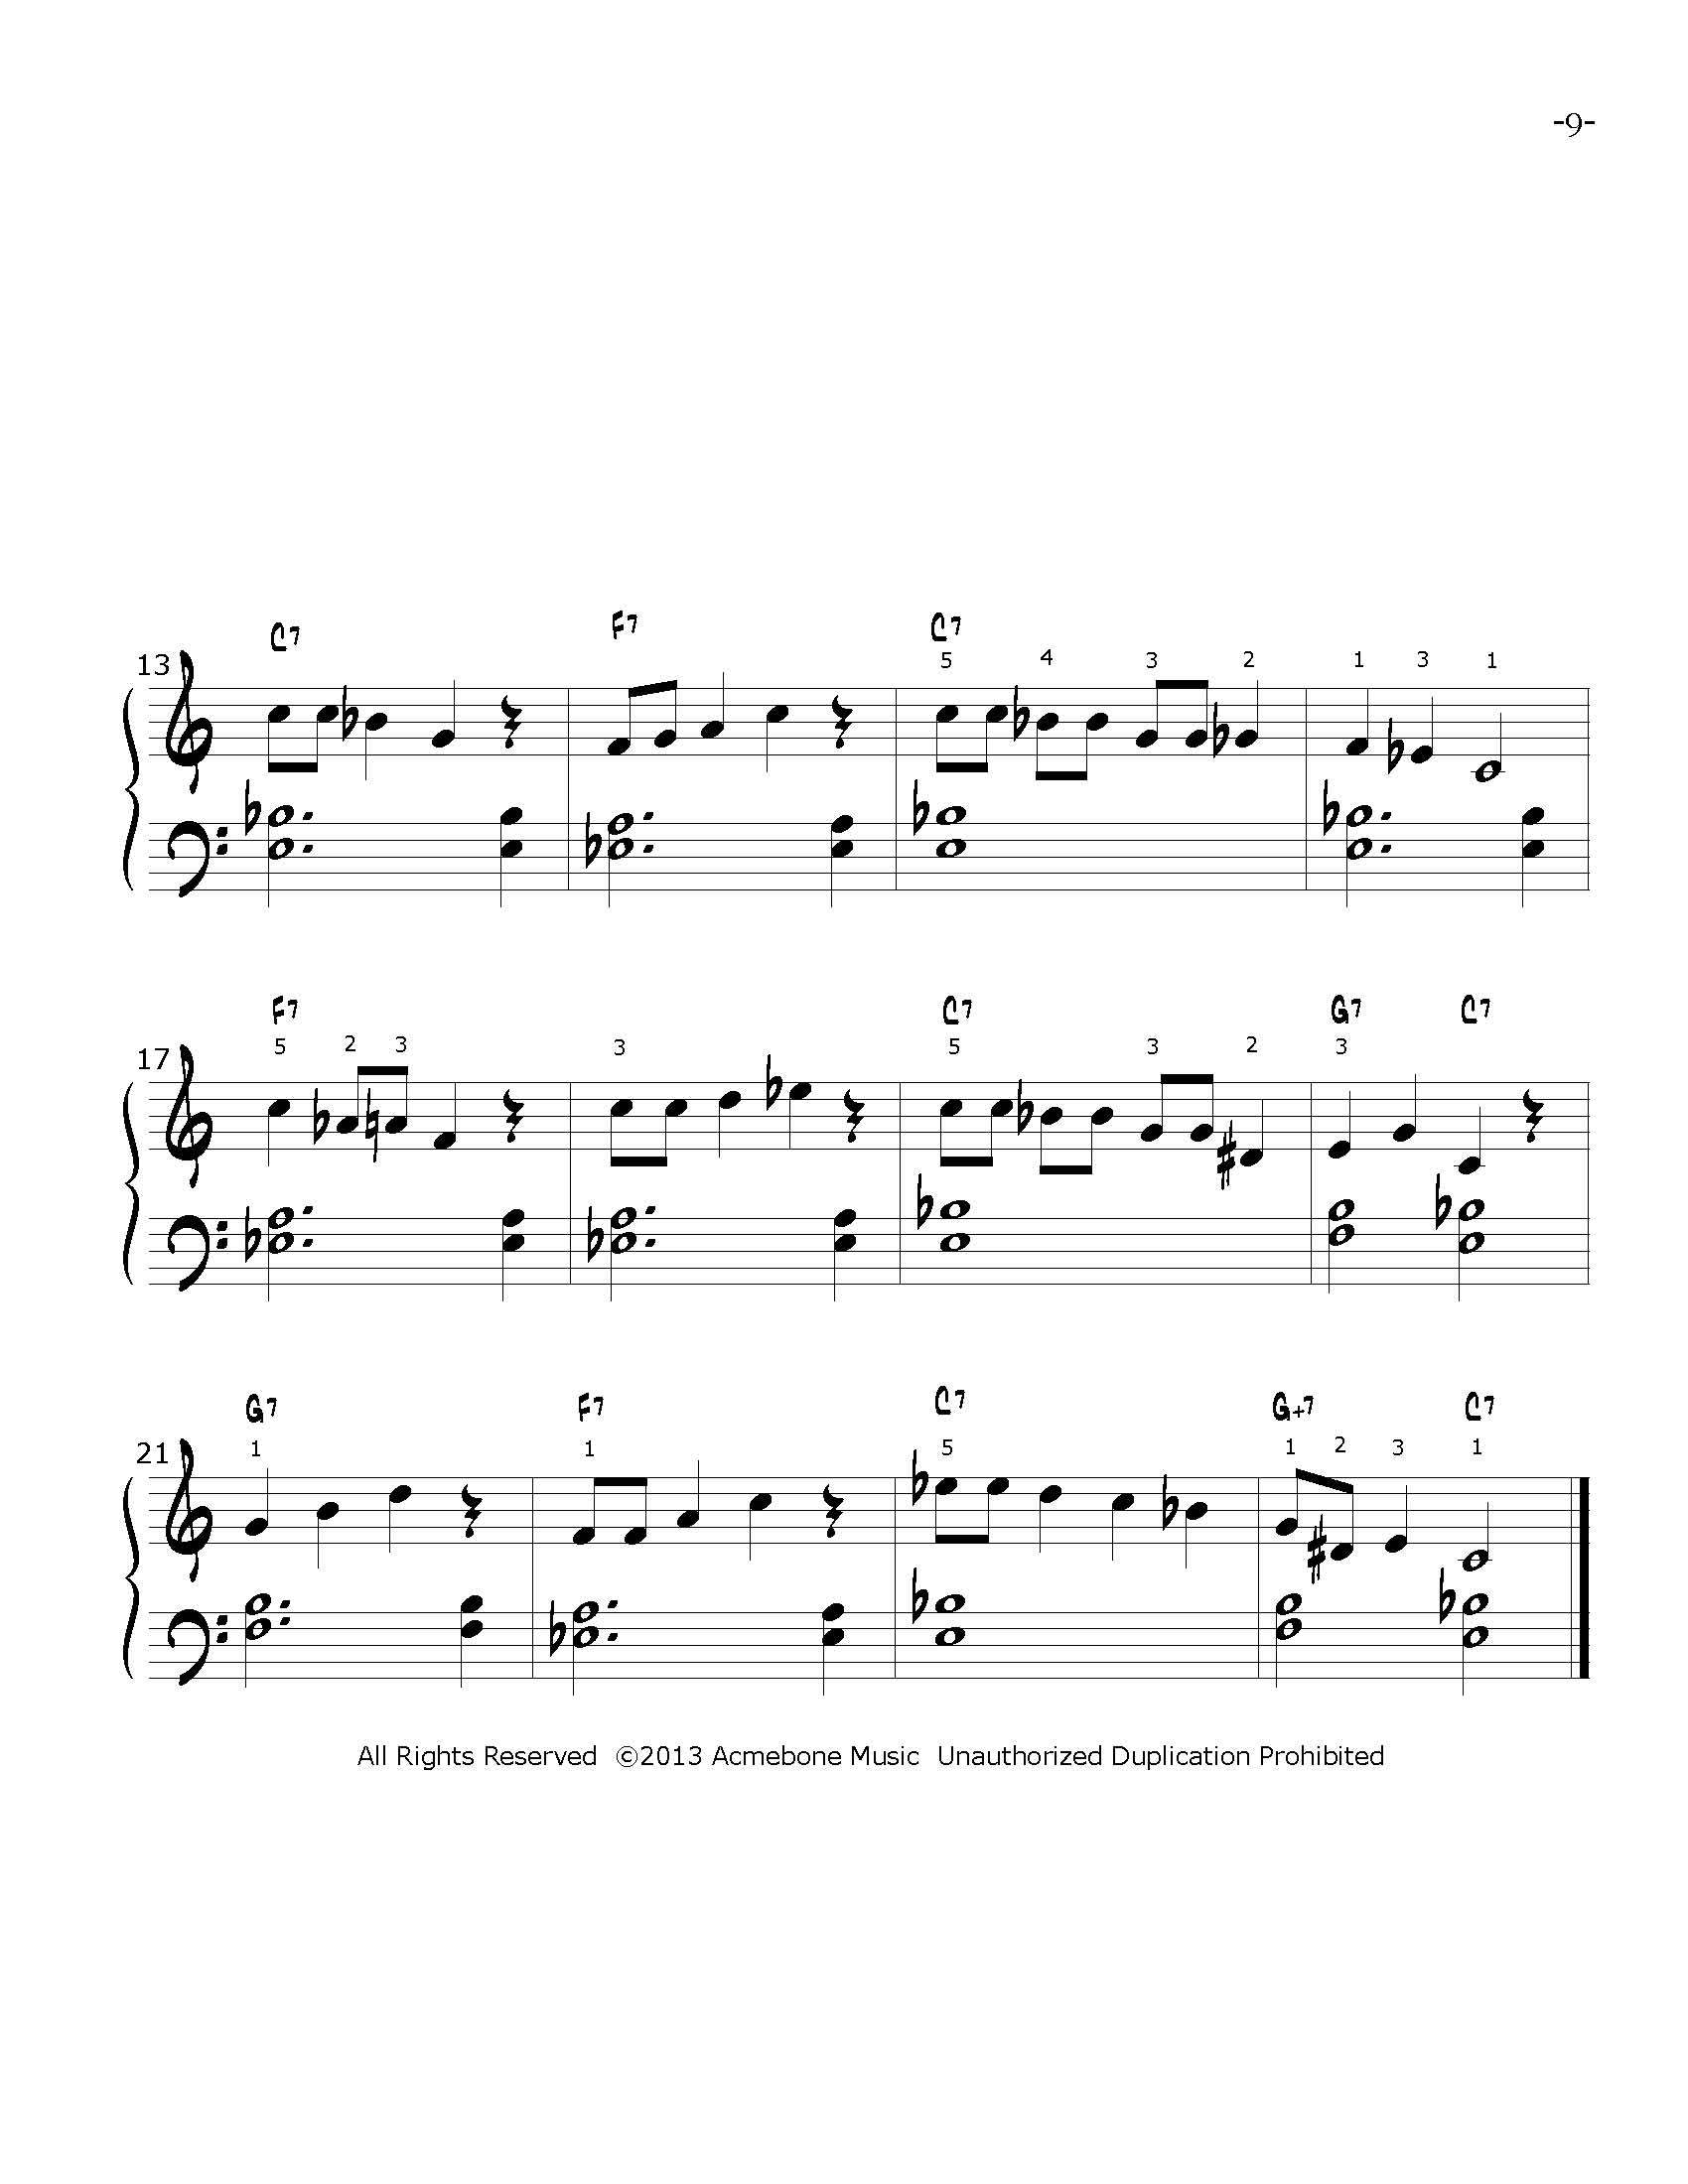 Progressive Jazz Etudes for Piano bk1 for web_Page_10.jpg